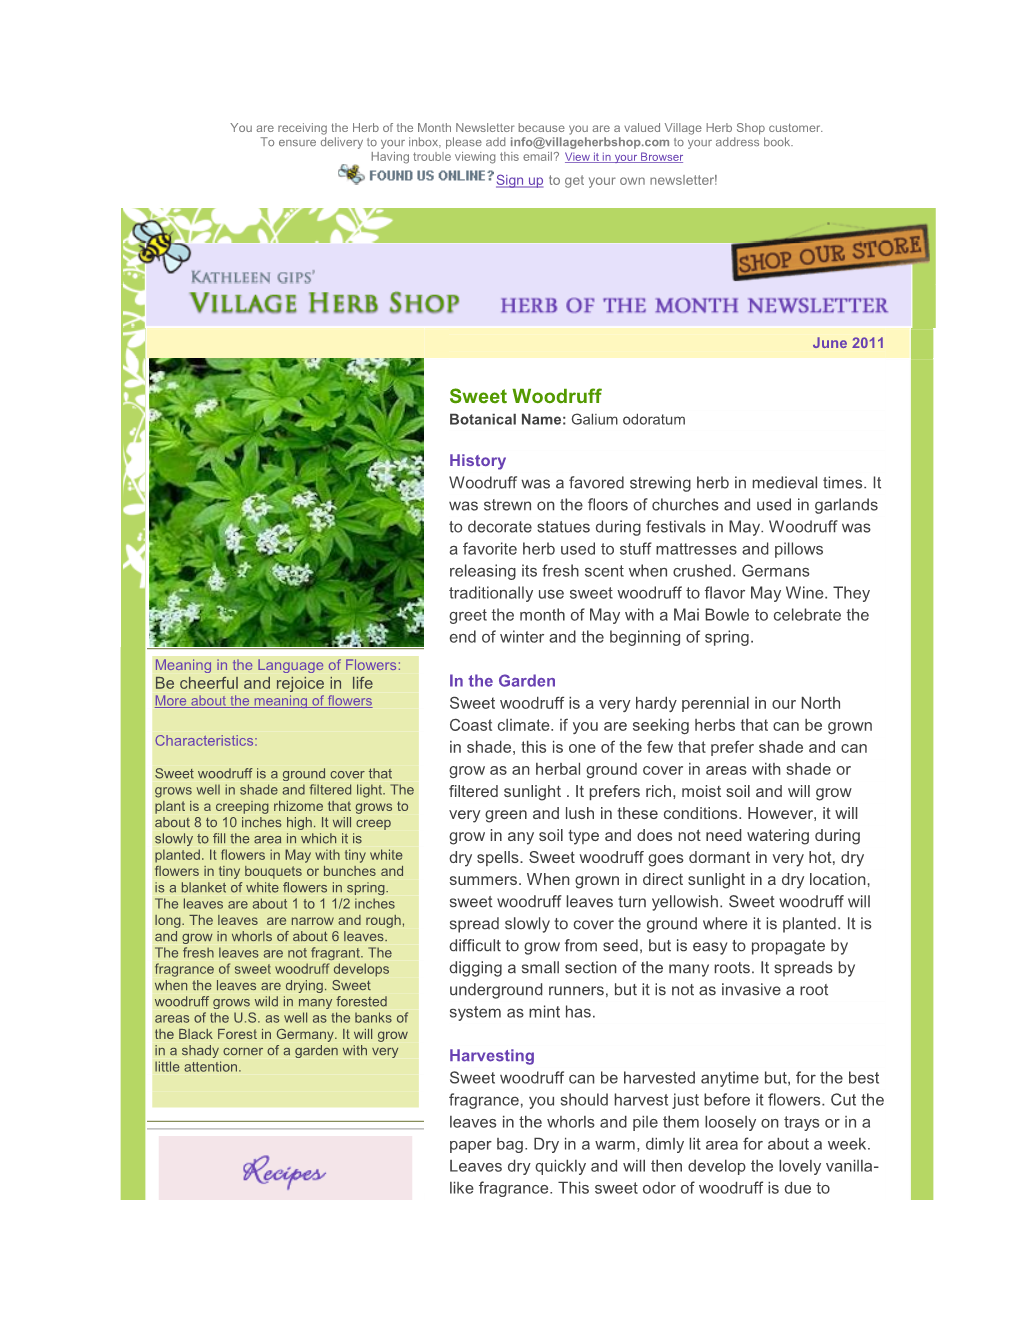 Sweet Woodruff Botanical Name: Galium Odoratum